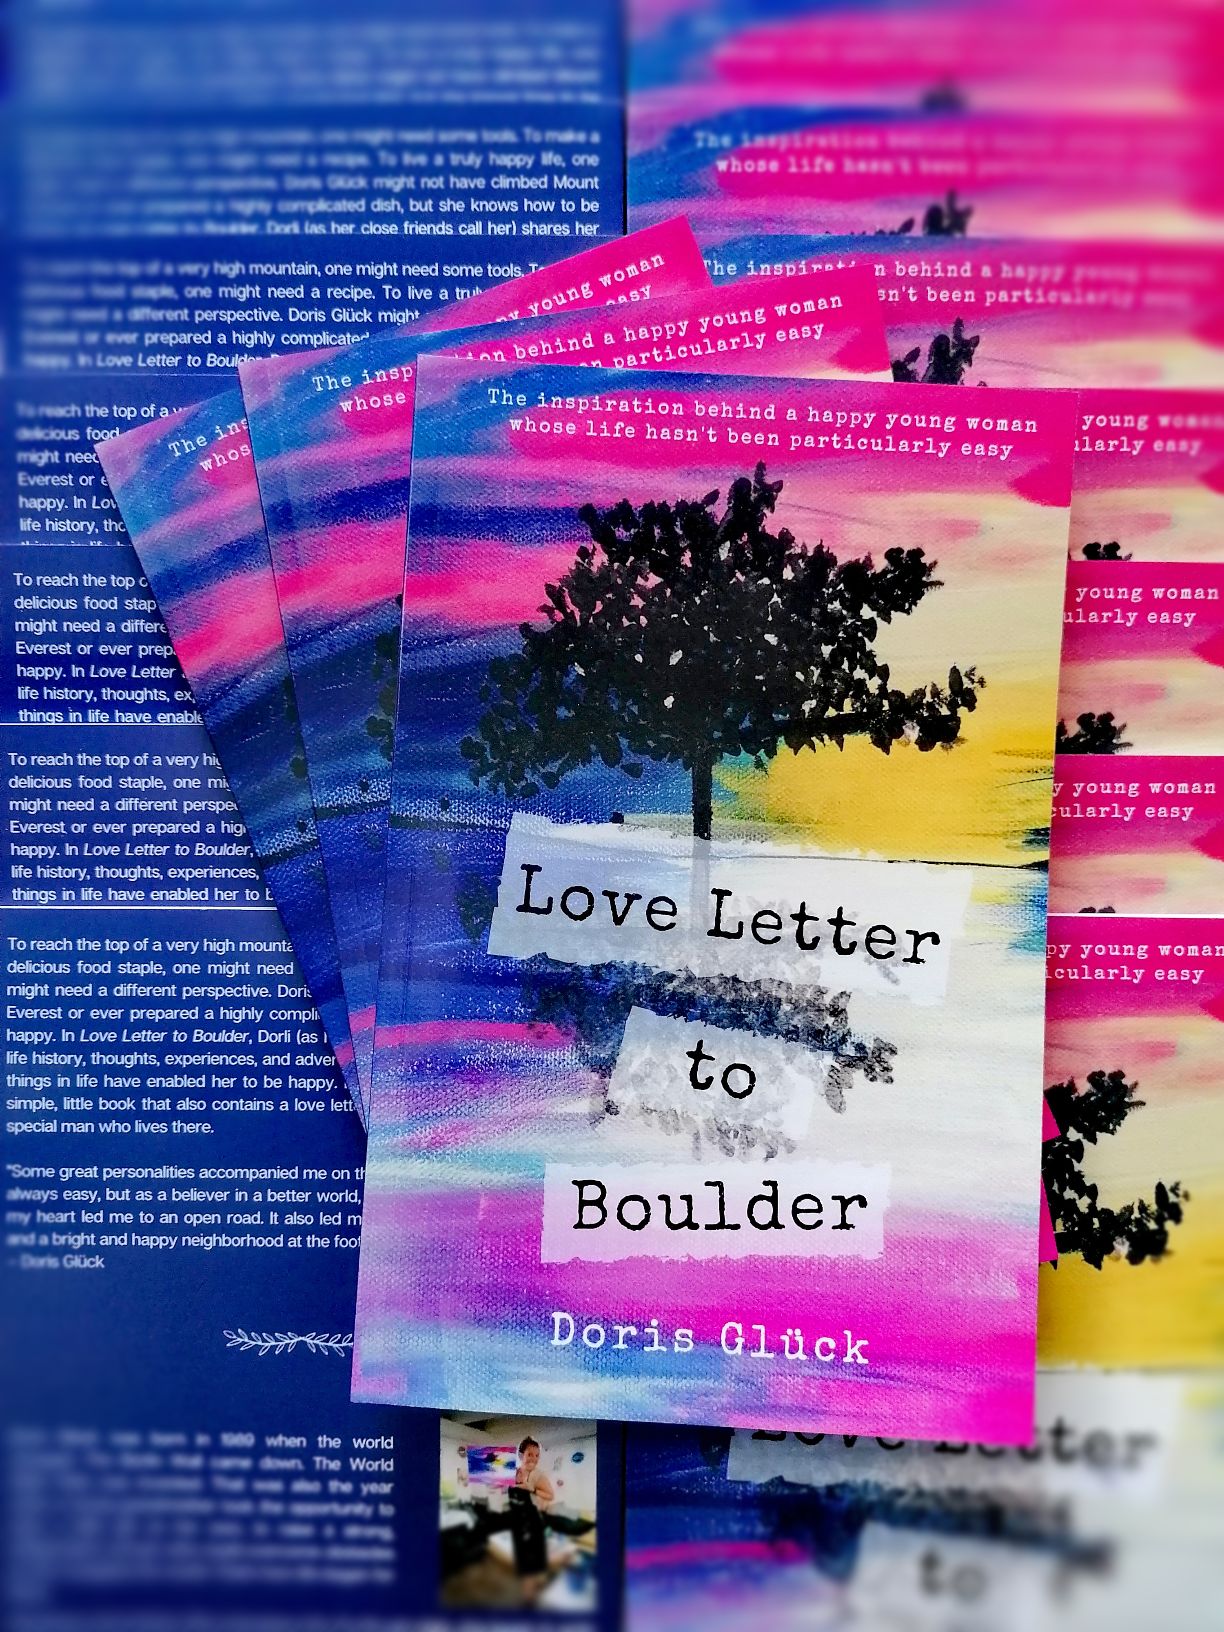 Love letter to Boulder, Doris Glück